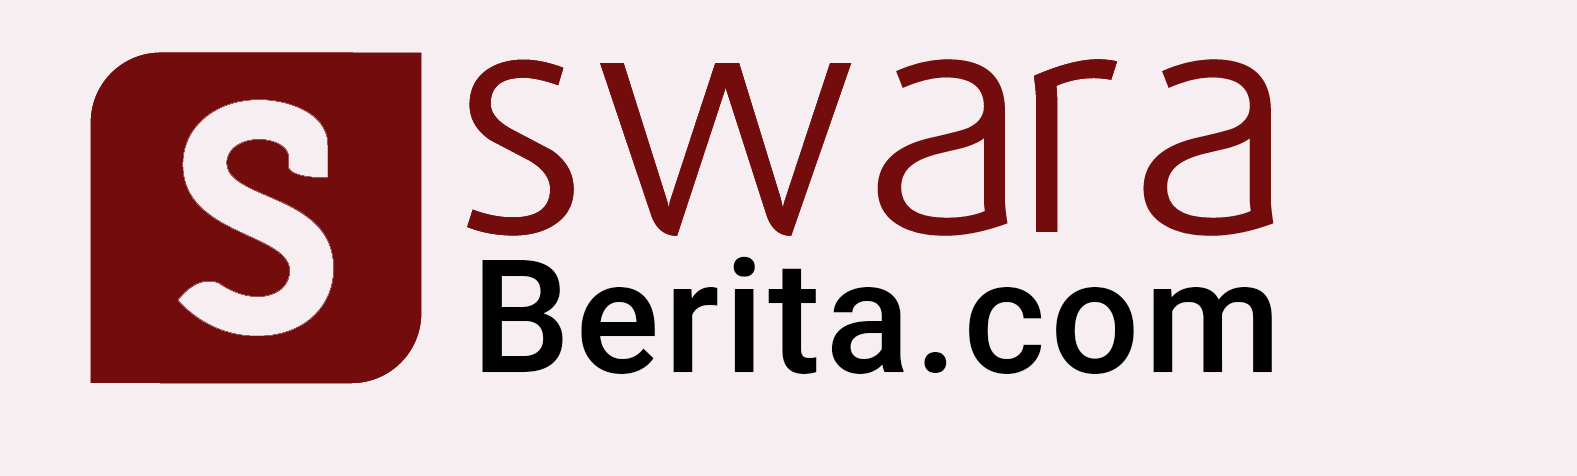 Swaraberita.com